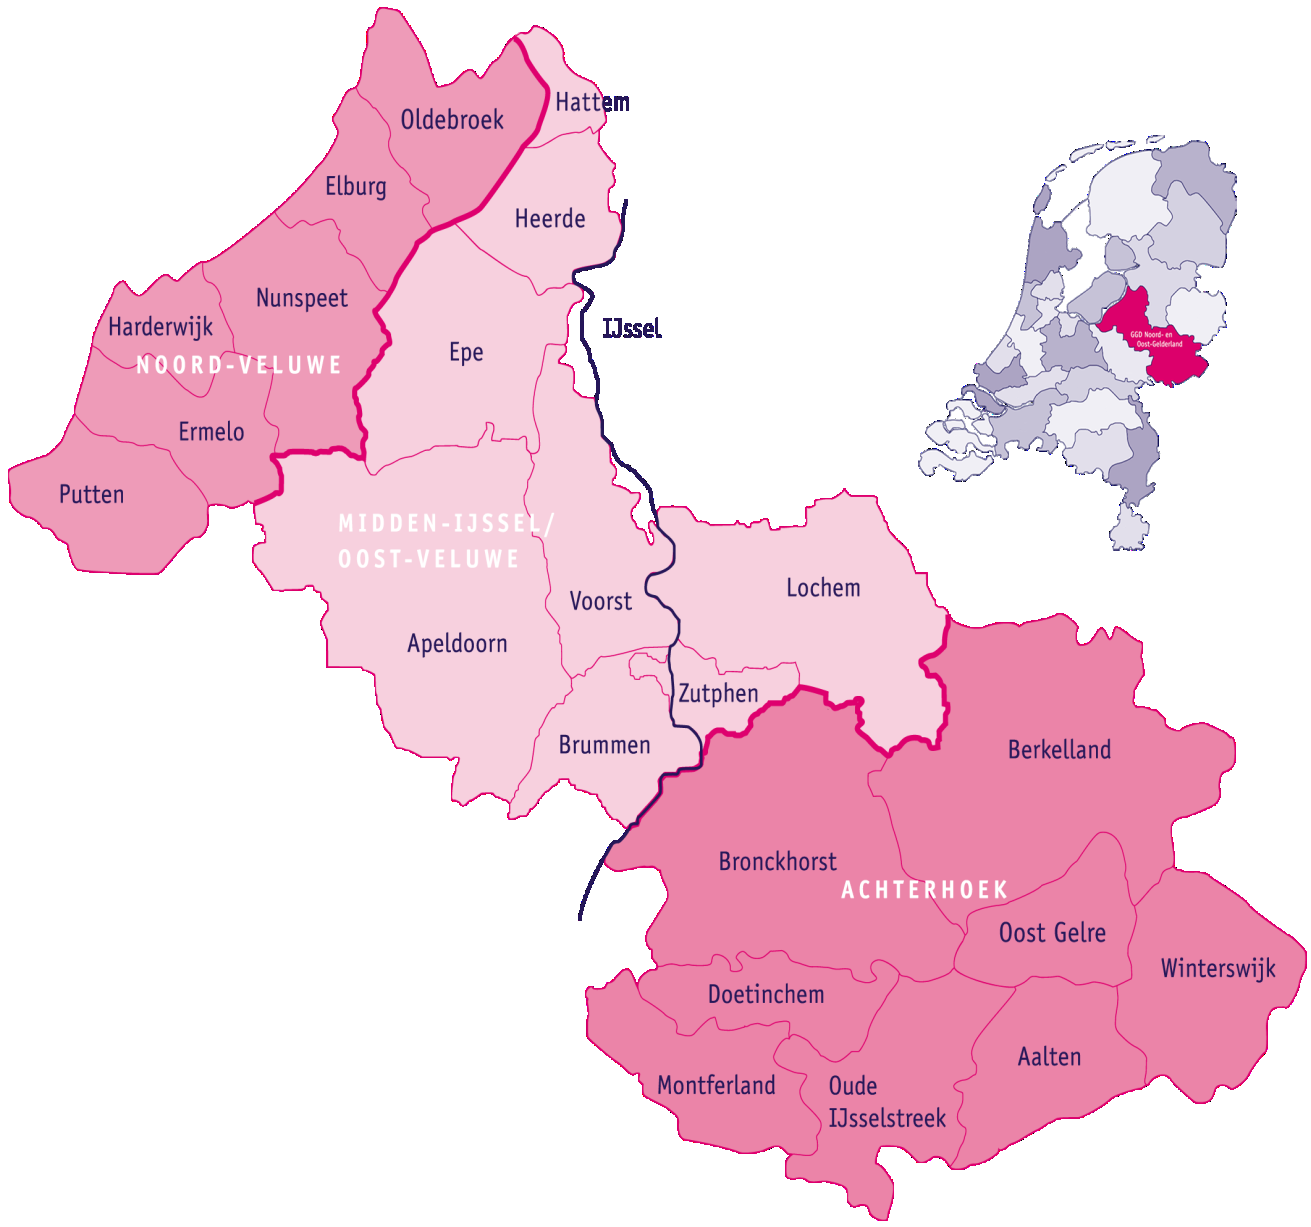 4. Kerngegevens begroting 2017 Werkgebied GGD Noord- en Oost-Gelderland Deelnemende gemeenten en inwoneraantallen 30-09-2015 Aantal deelnemende gemeenten 22 Totaal aantal inwoners 812.